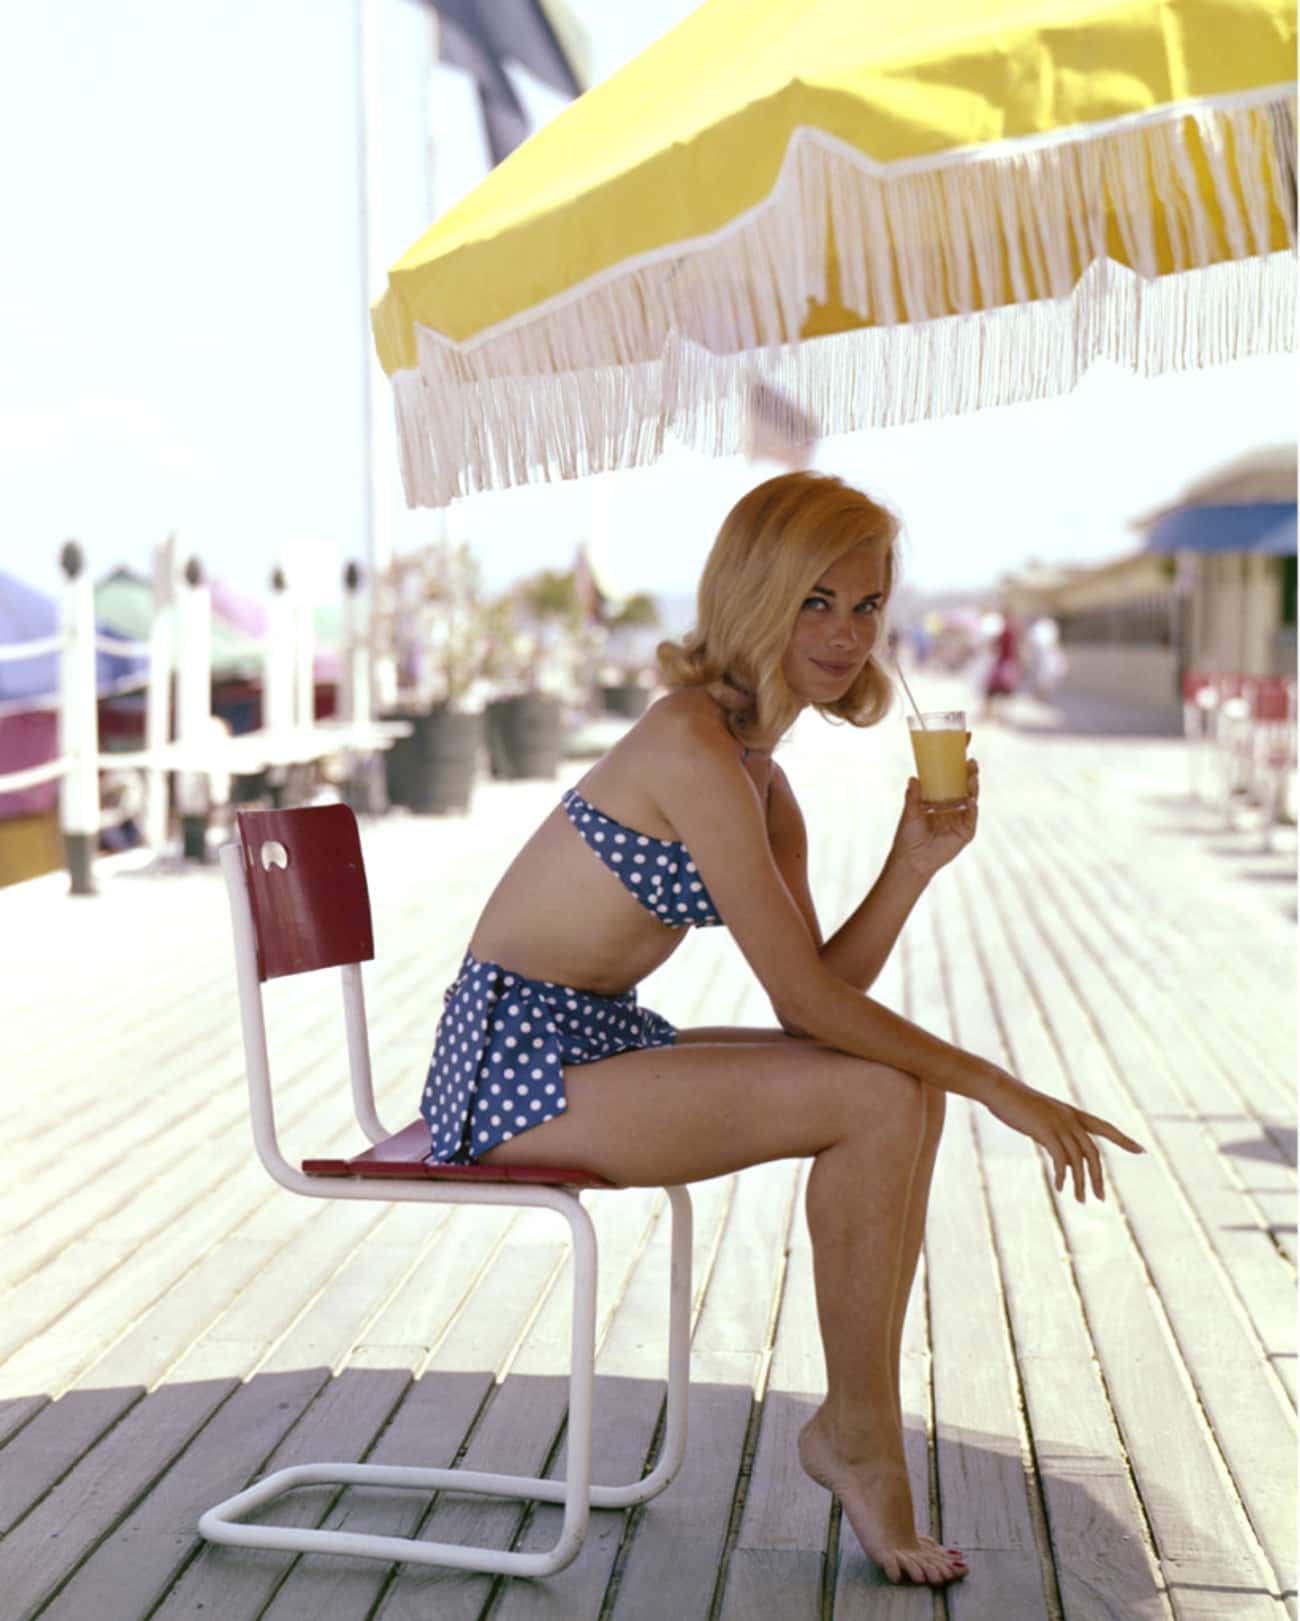 Bikini Girl On The French Boardwalk, 1959